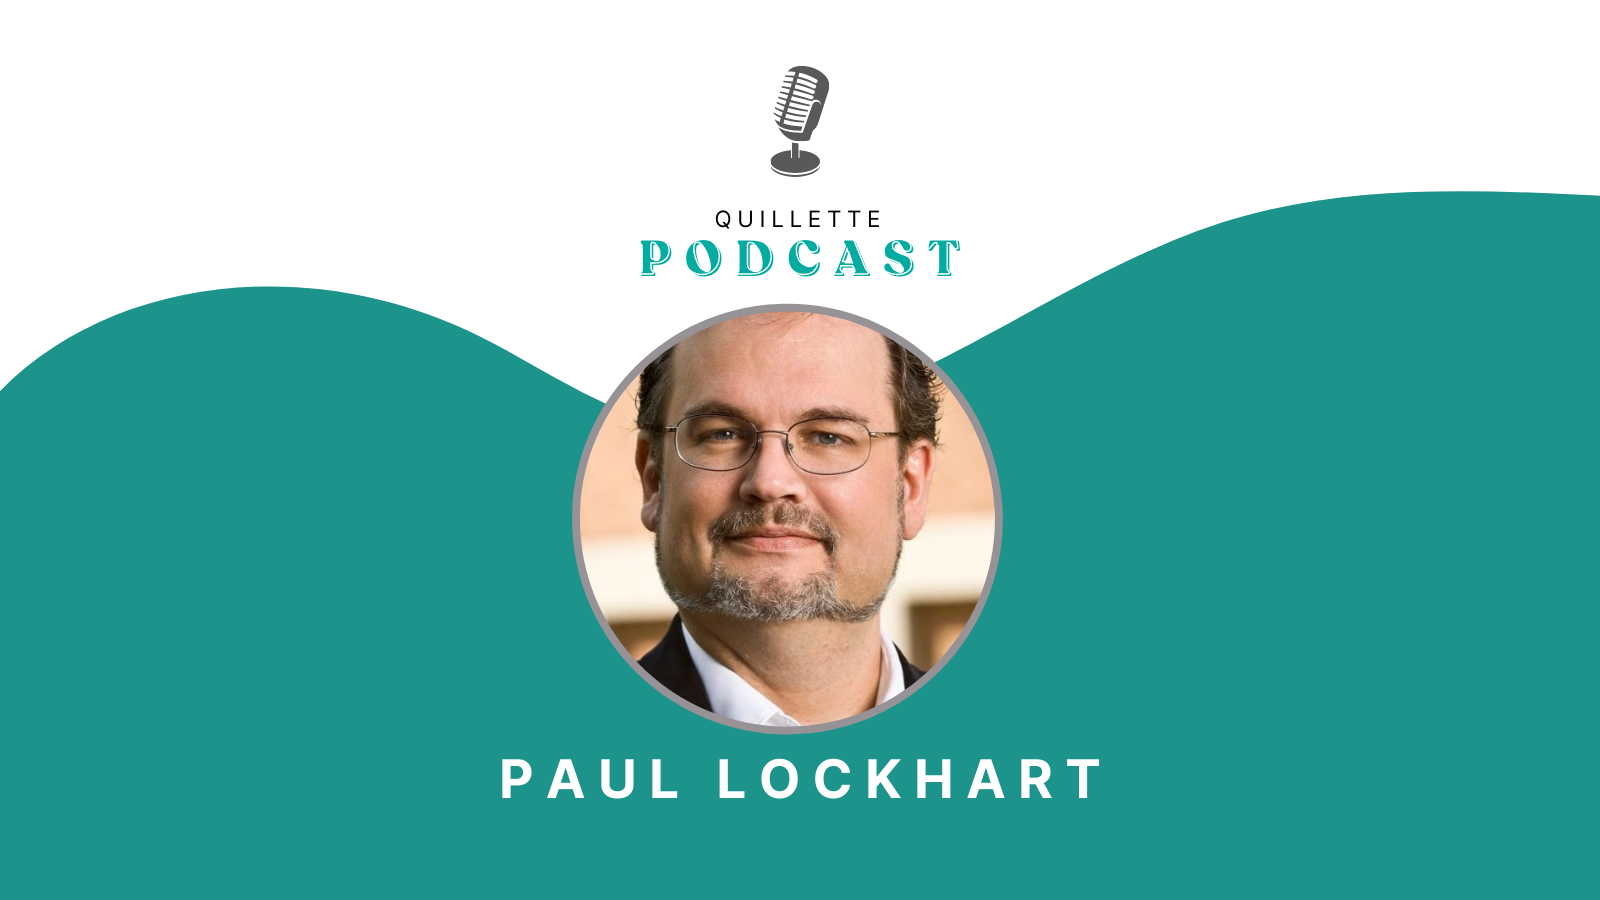 Podcast #175: Paul Lockhart on How Guns Transformed Western Civilization